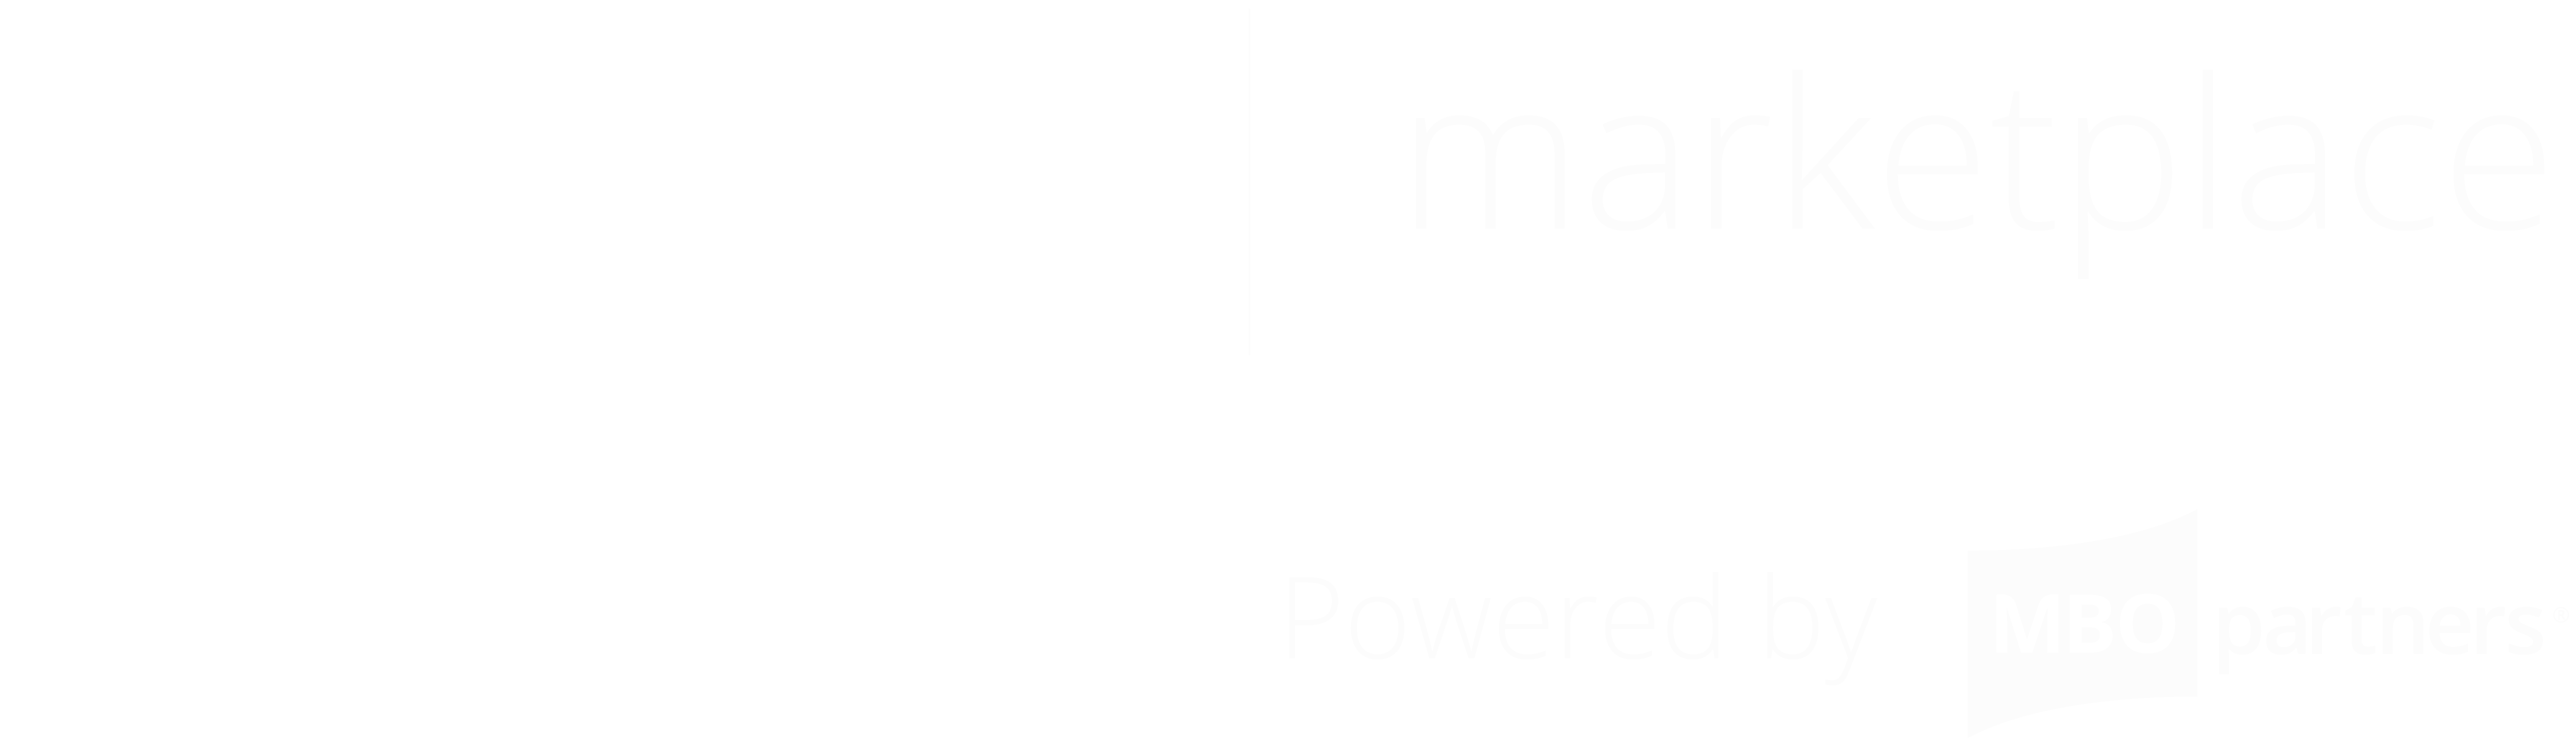 Microsoft marketplace logo